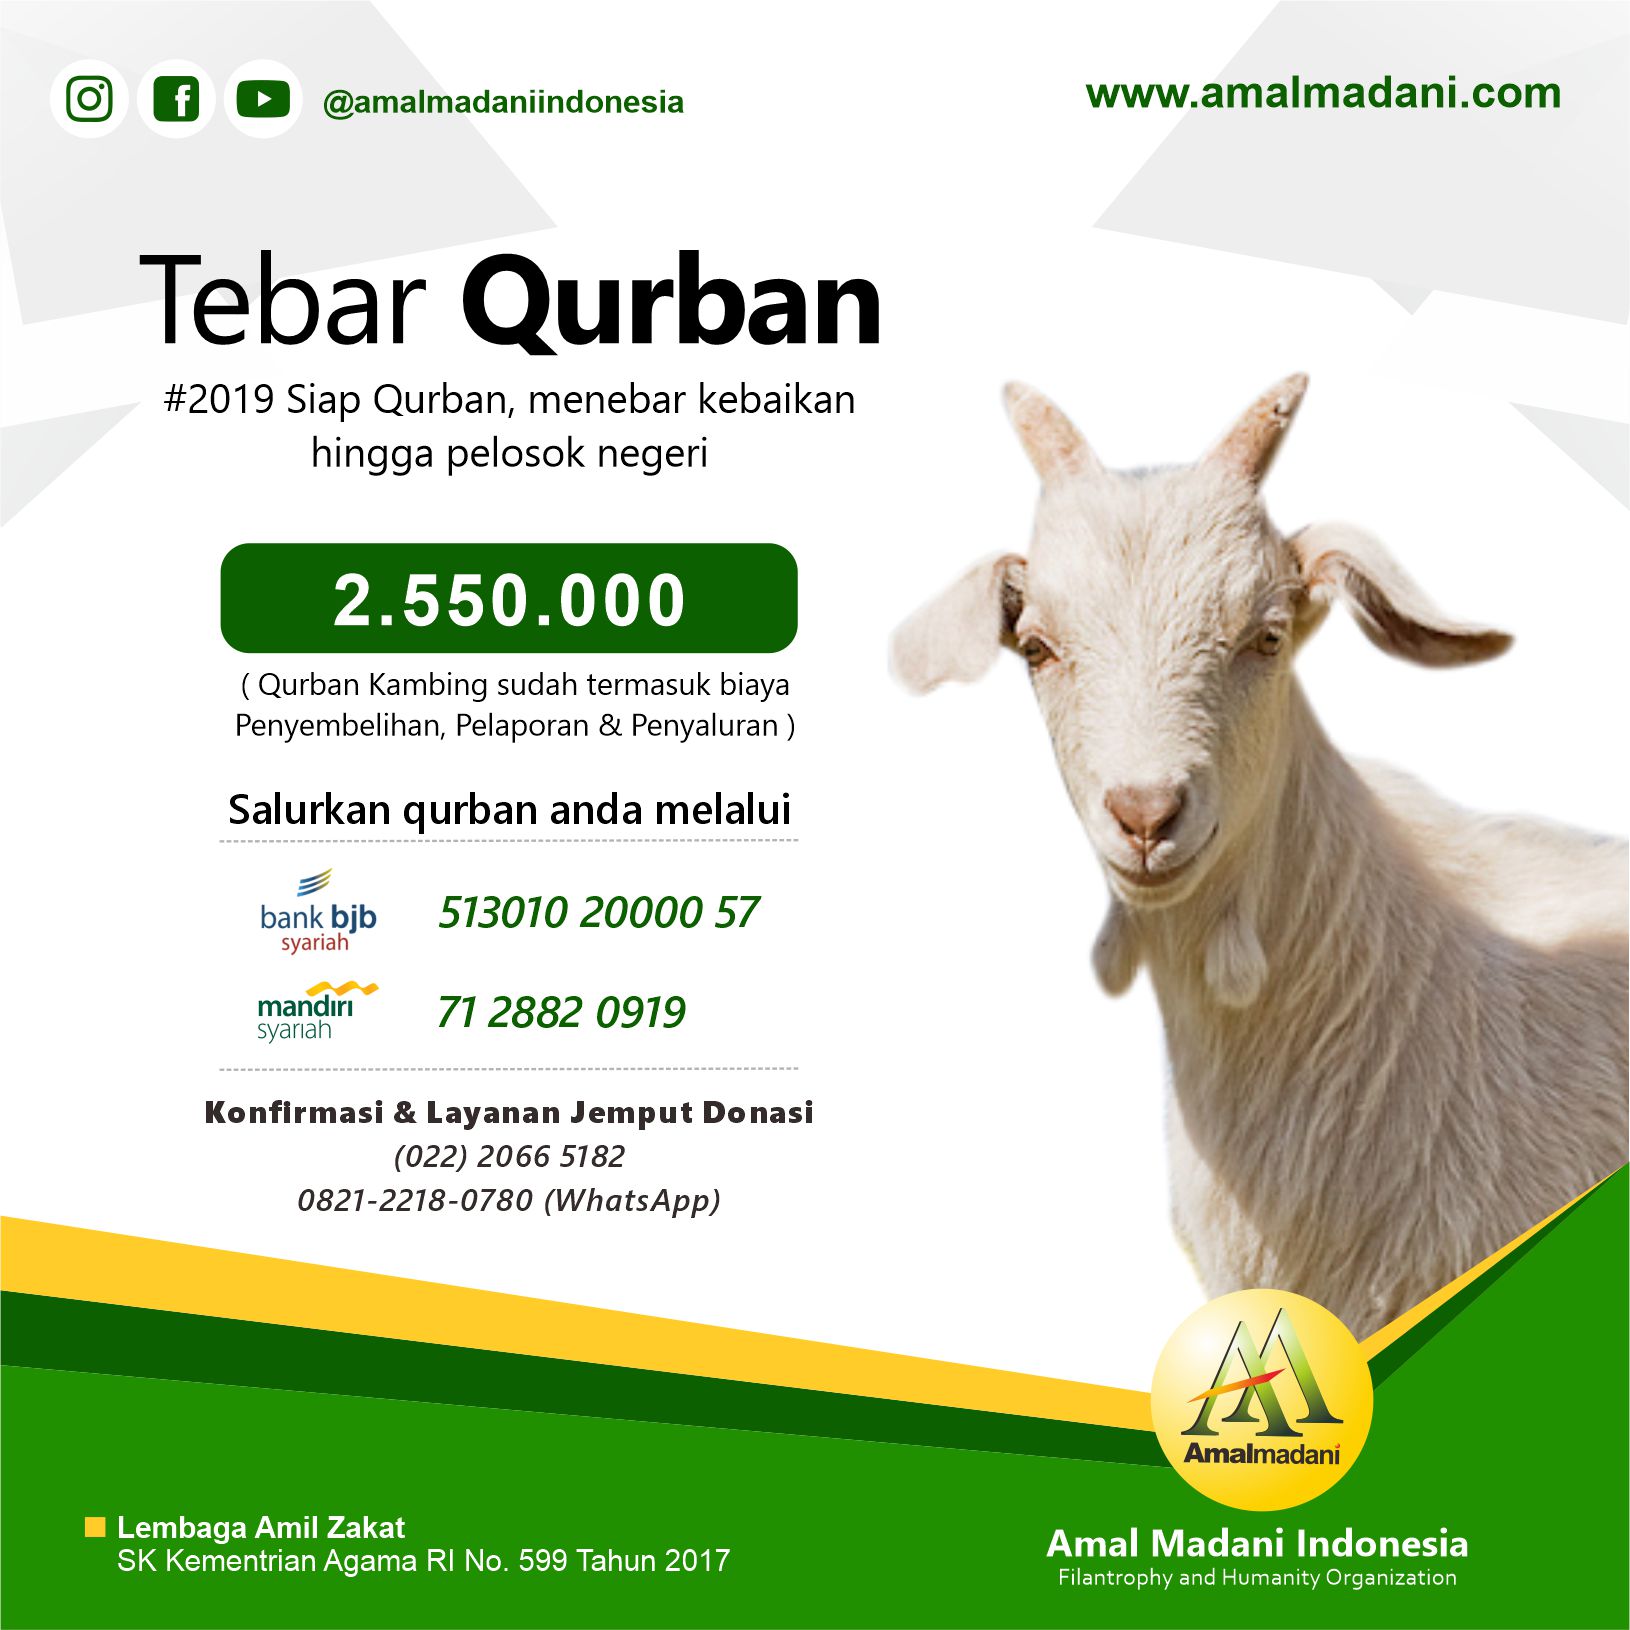 Tebar Qurban 2019